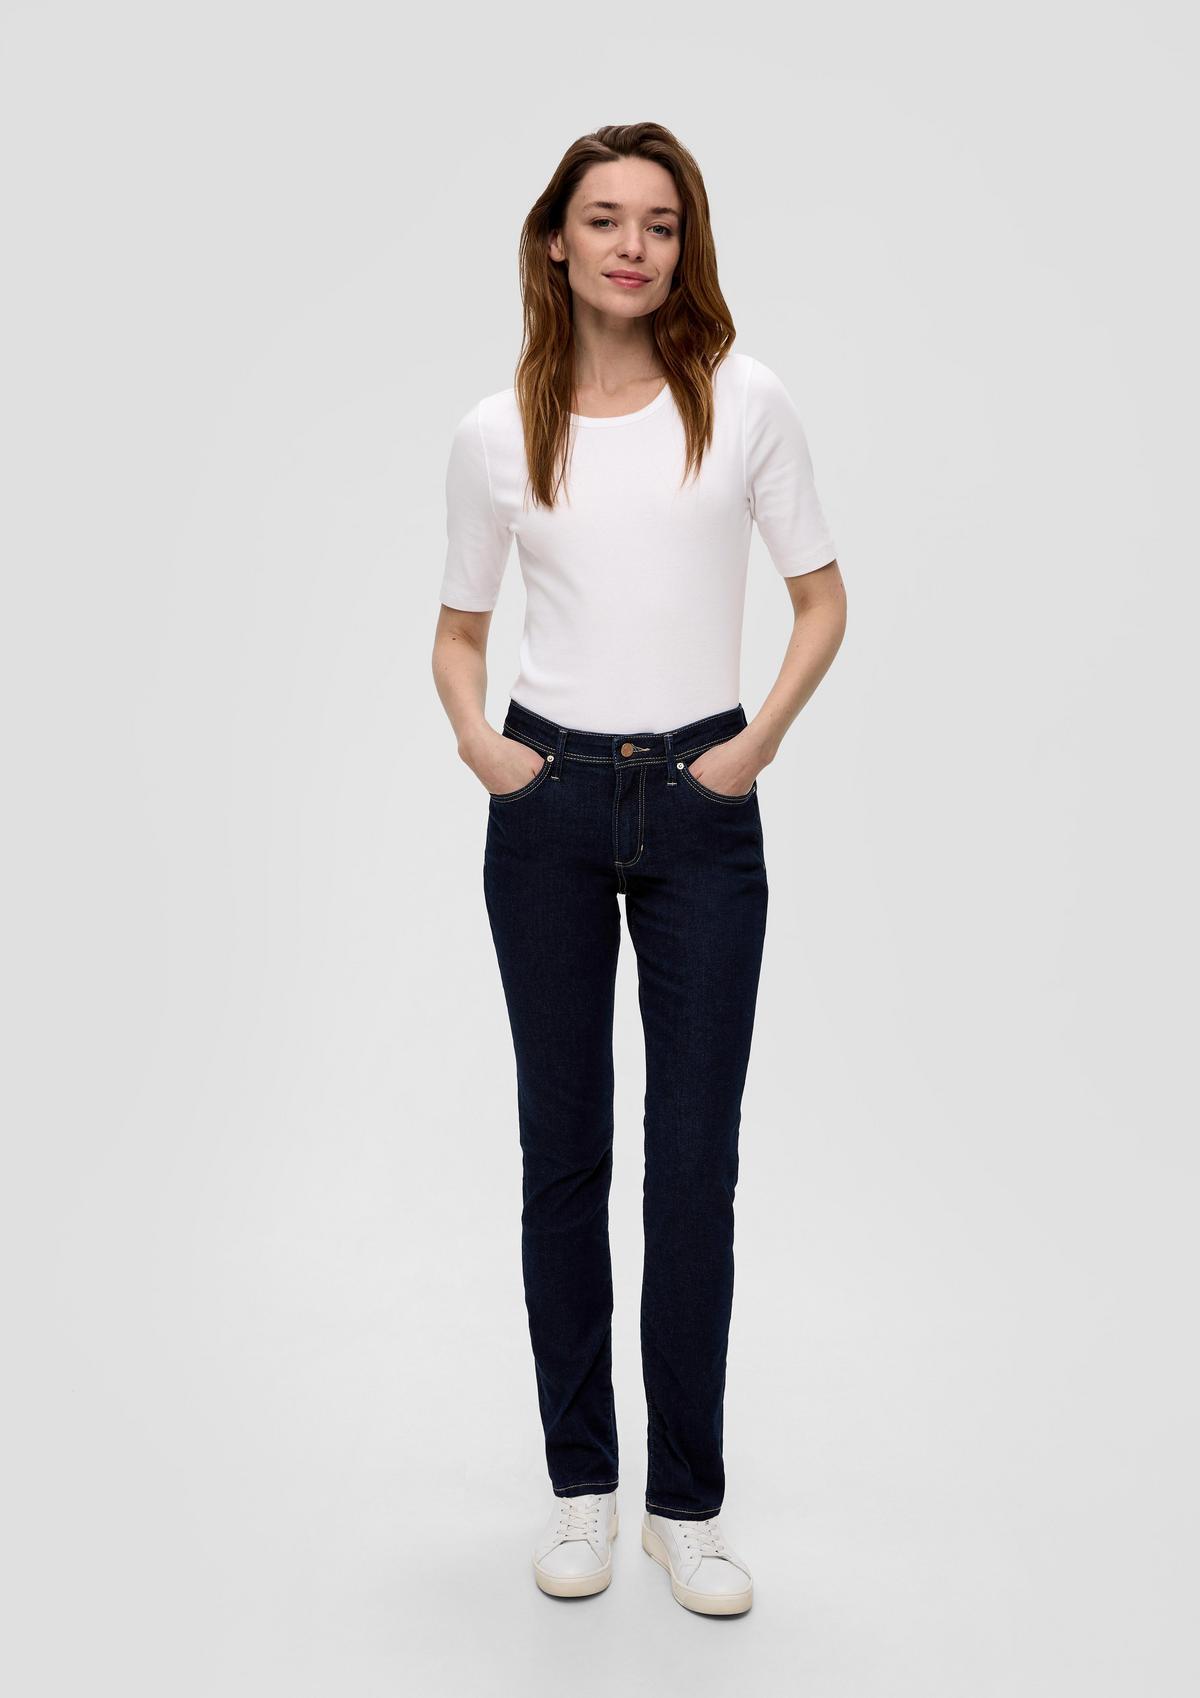 s.Oliver Betsy jeans / slim fit / mid rise / slim leg